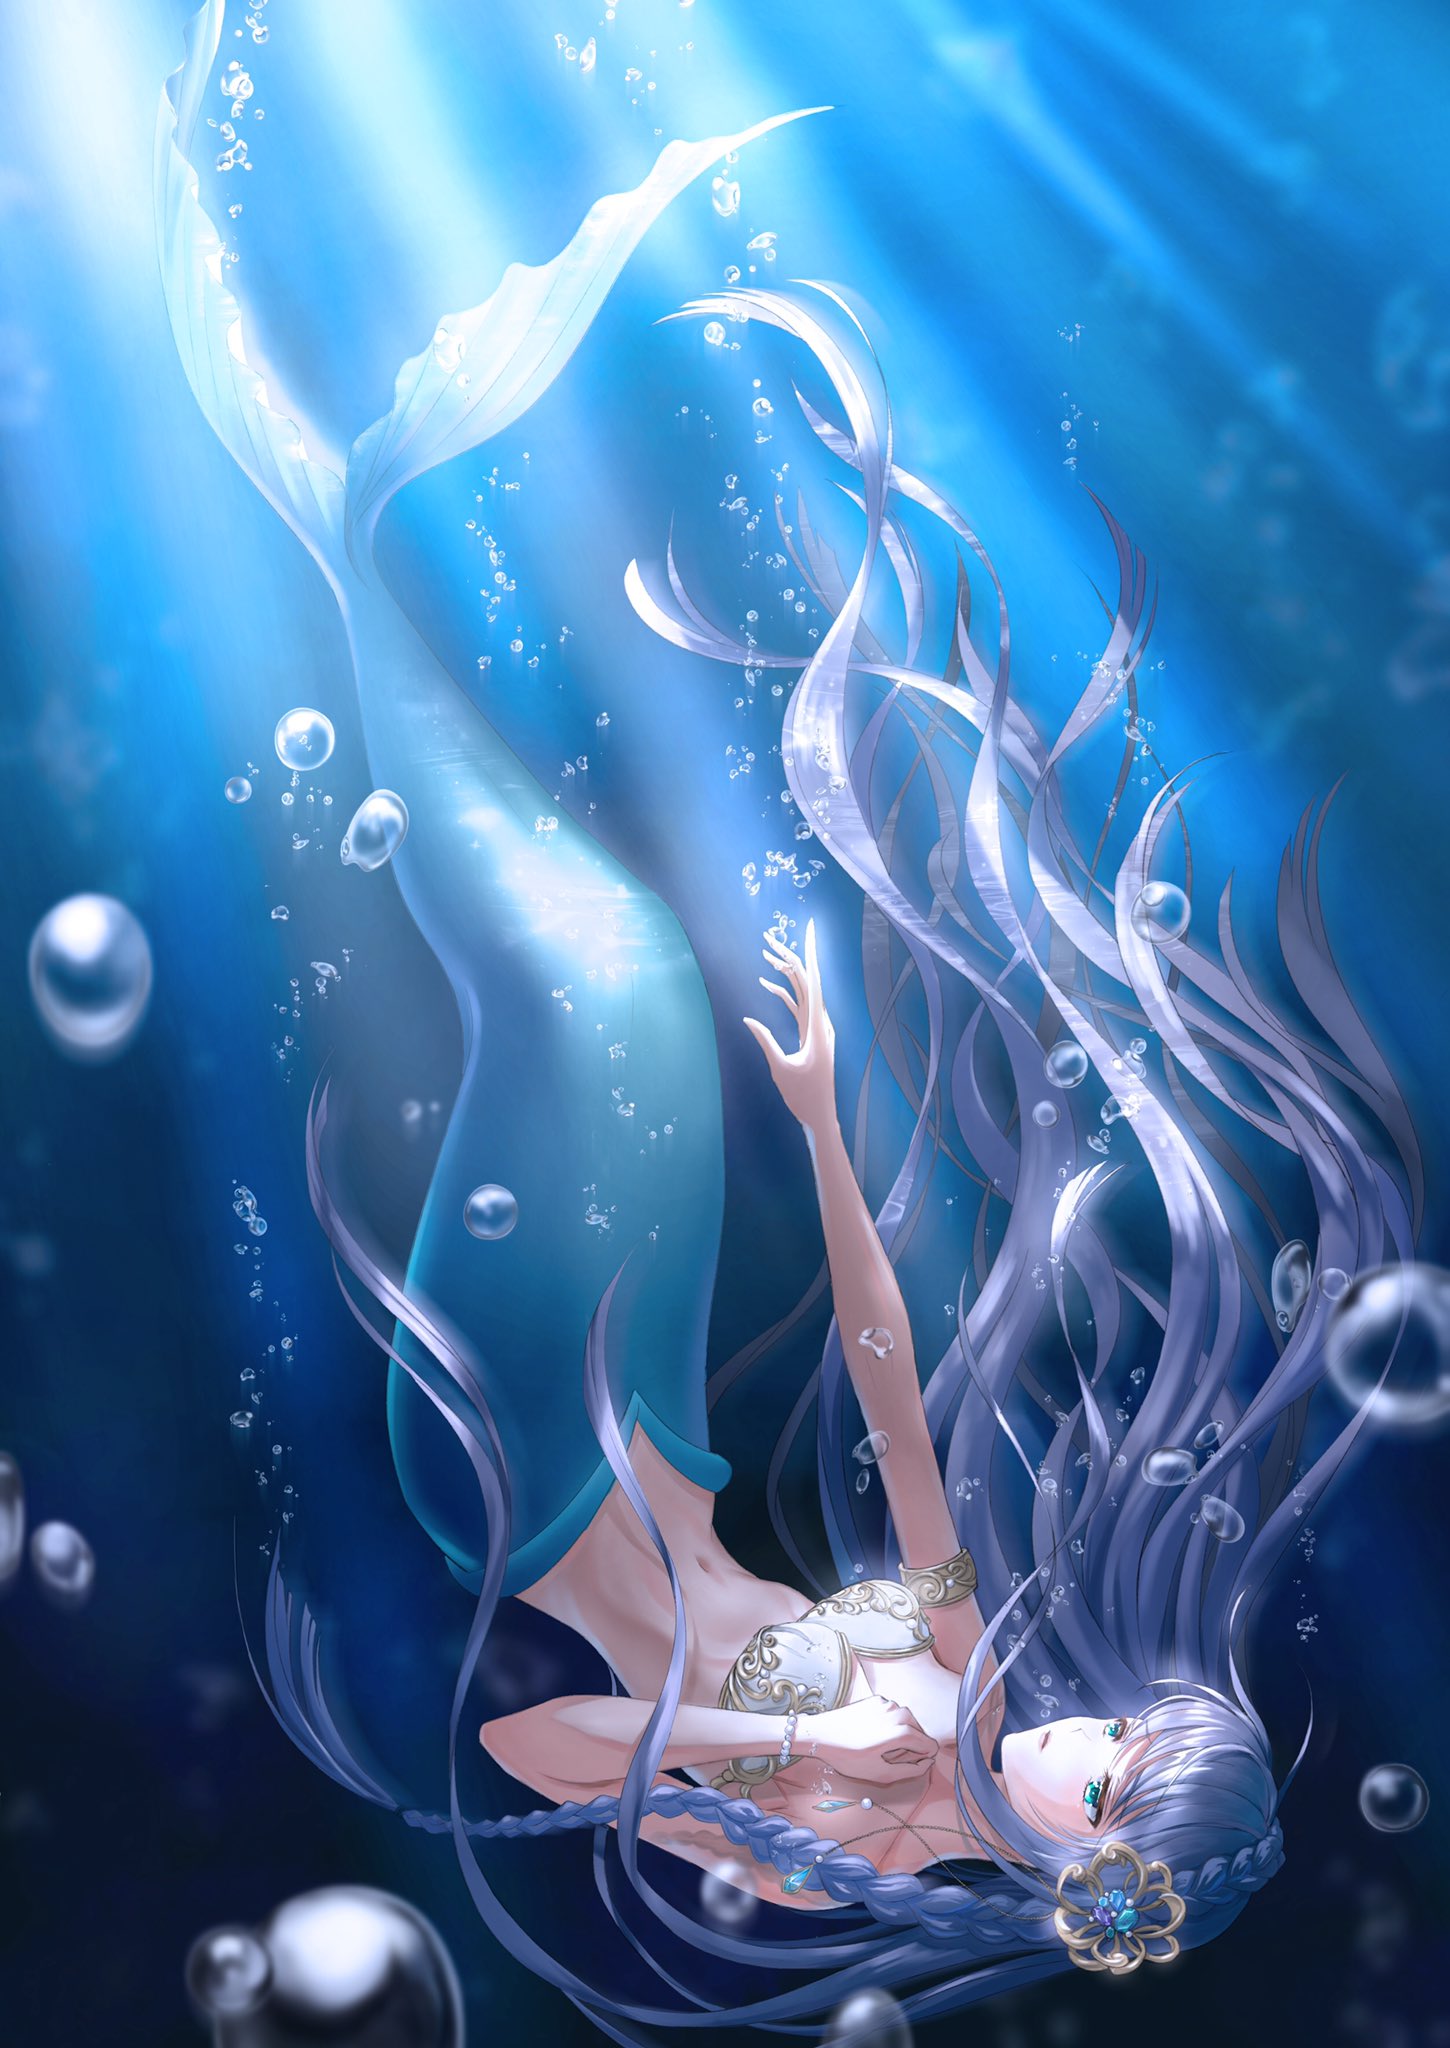 تويتر 晴 على تويتر 叶わぬ願い 人魚姫をイメージしてみました イラスト完成 人魚姫 マーメイド 創作 T Co uwcv26o4